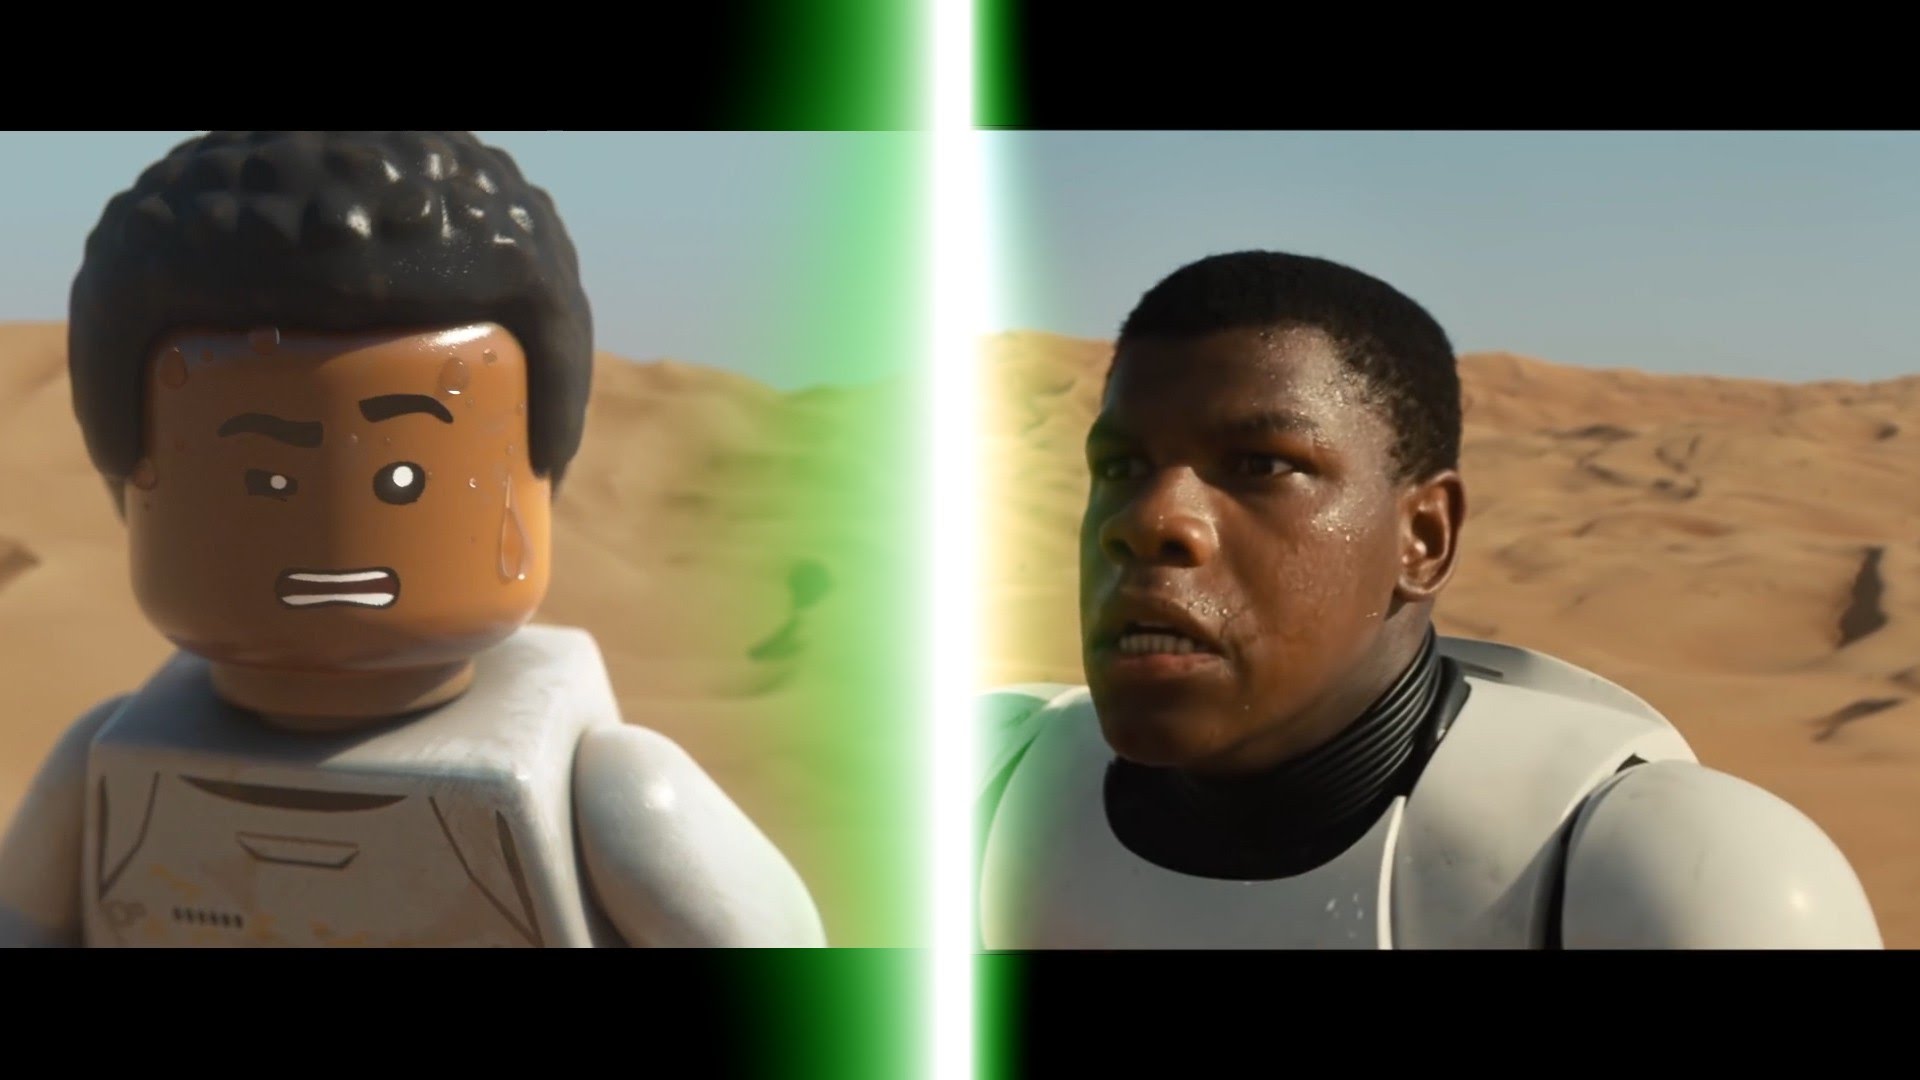 LEGO Star Wars: The Force Awakens Trailer Comparison